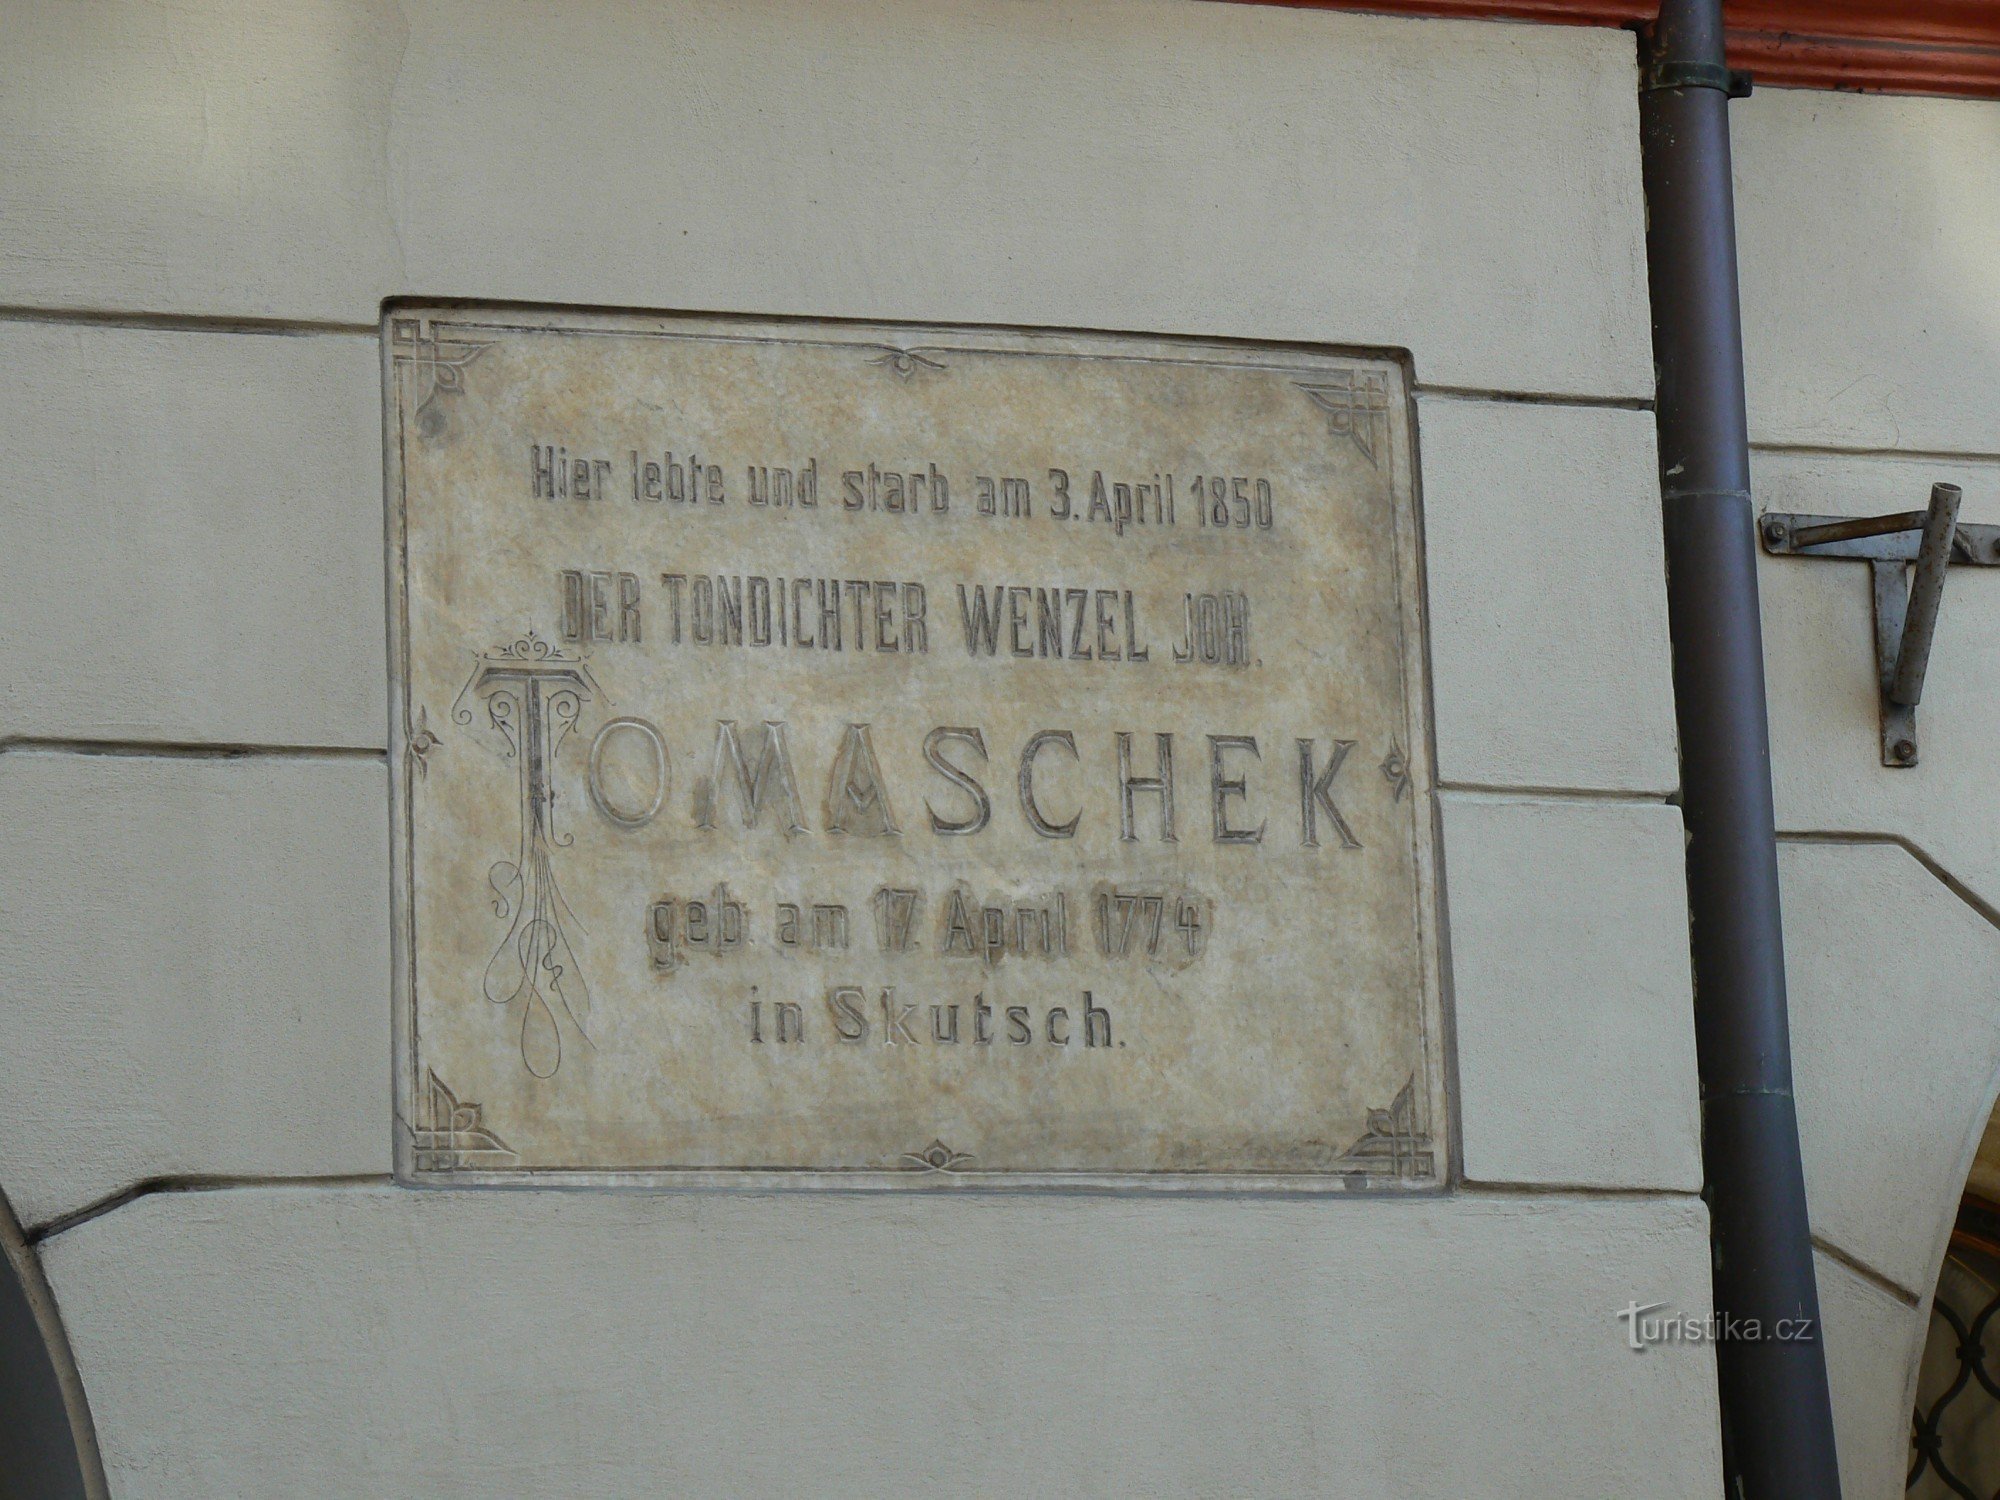 VJトマシェクの記念碑 - ドイツ語